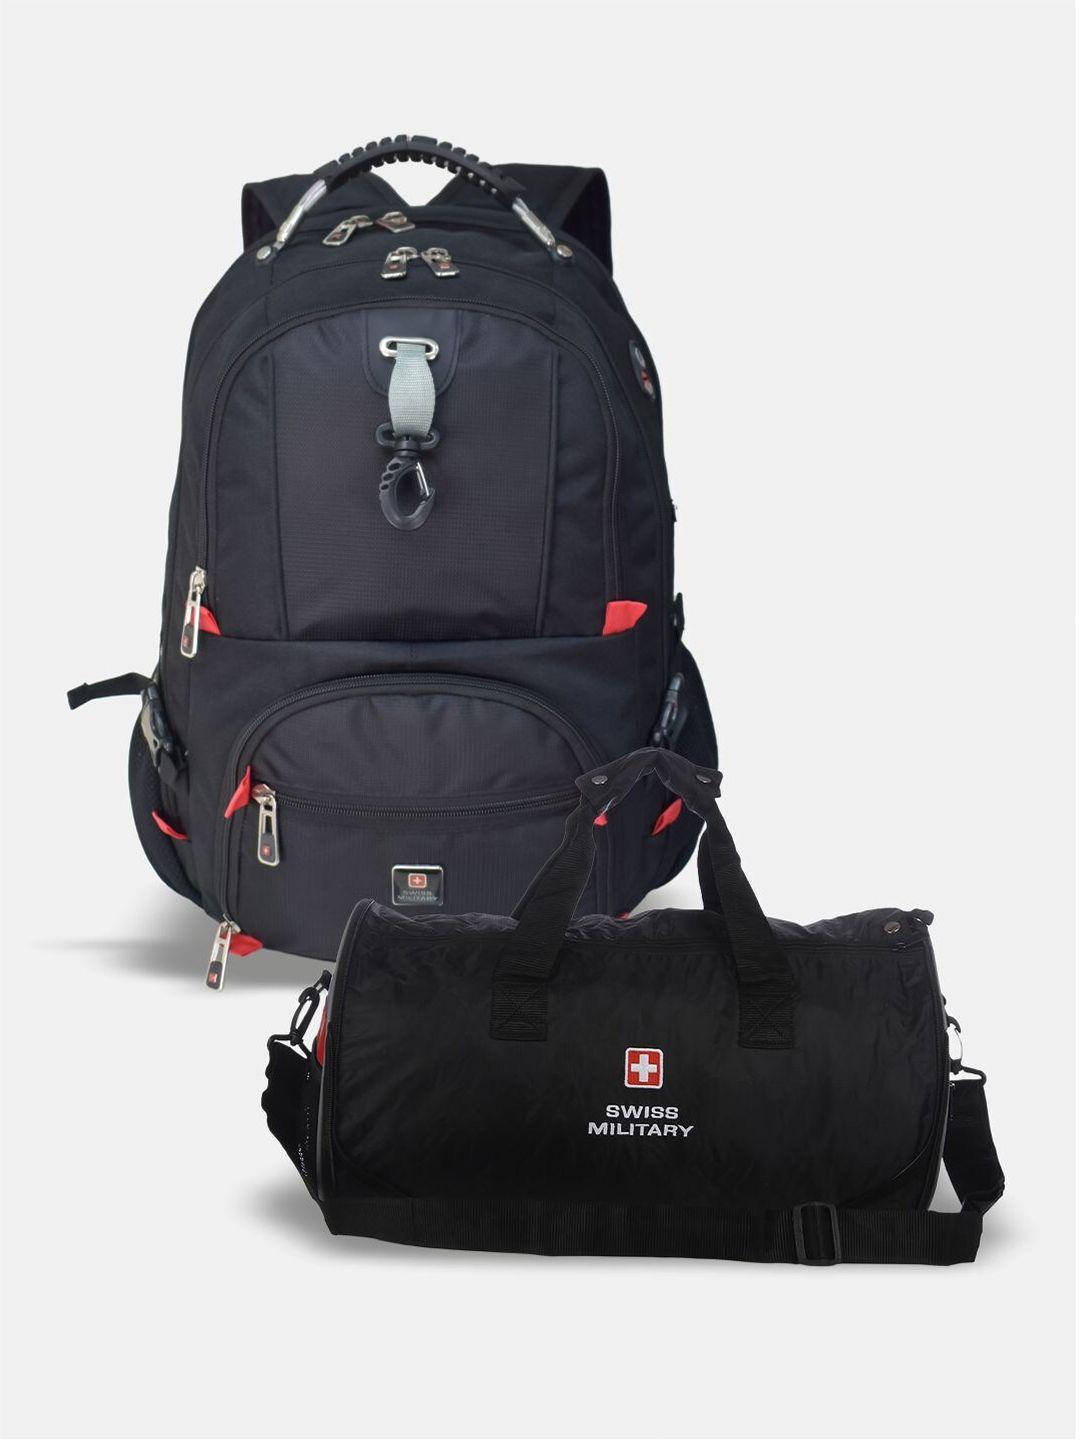 swiss military backpack & foldable duffel bag